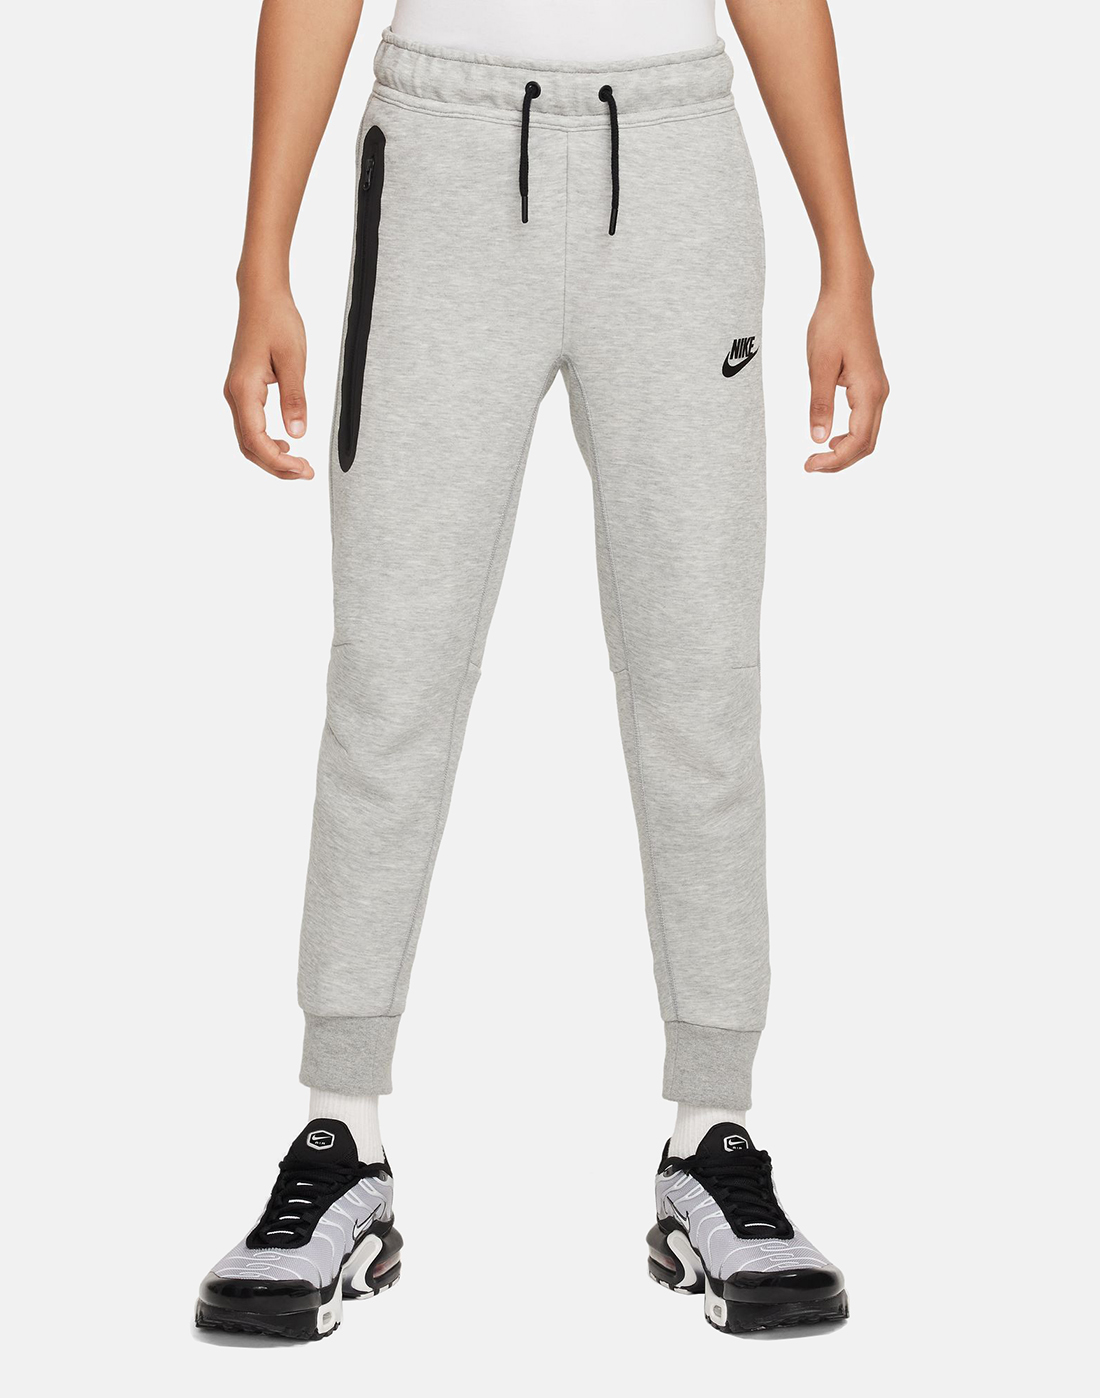 Nike Older Boys Tech Fleece Pant - Grey | Life Style Sports IE